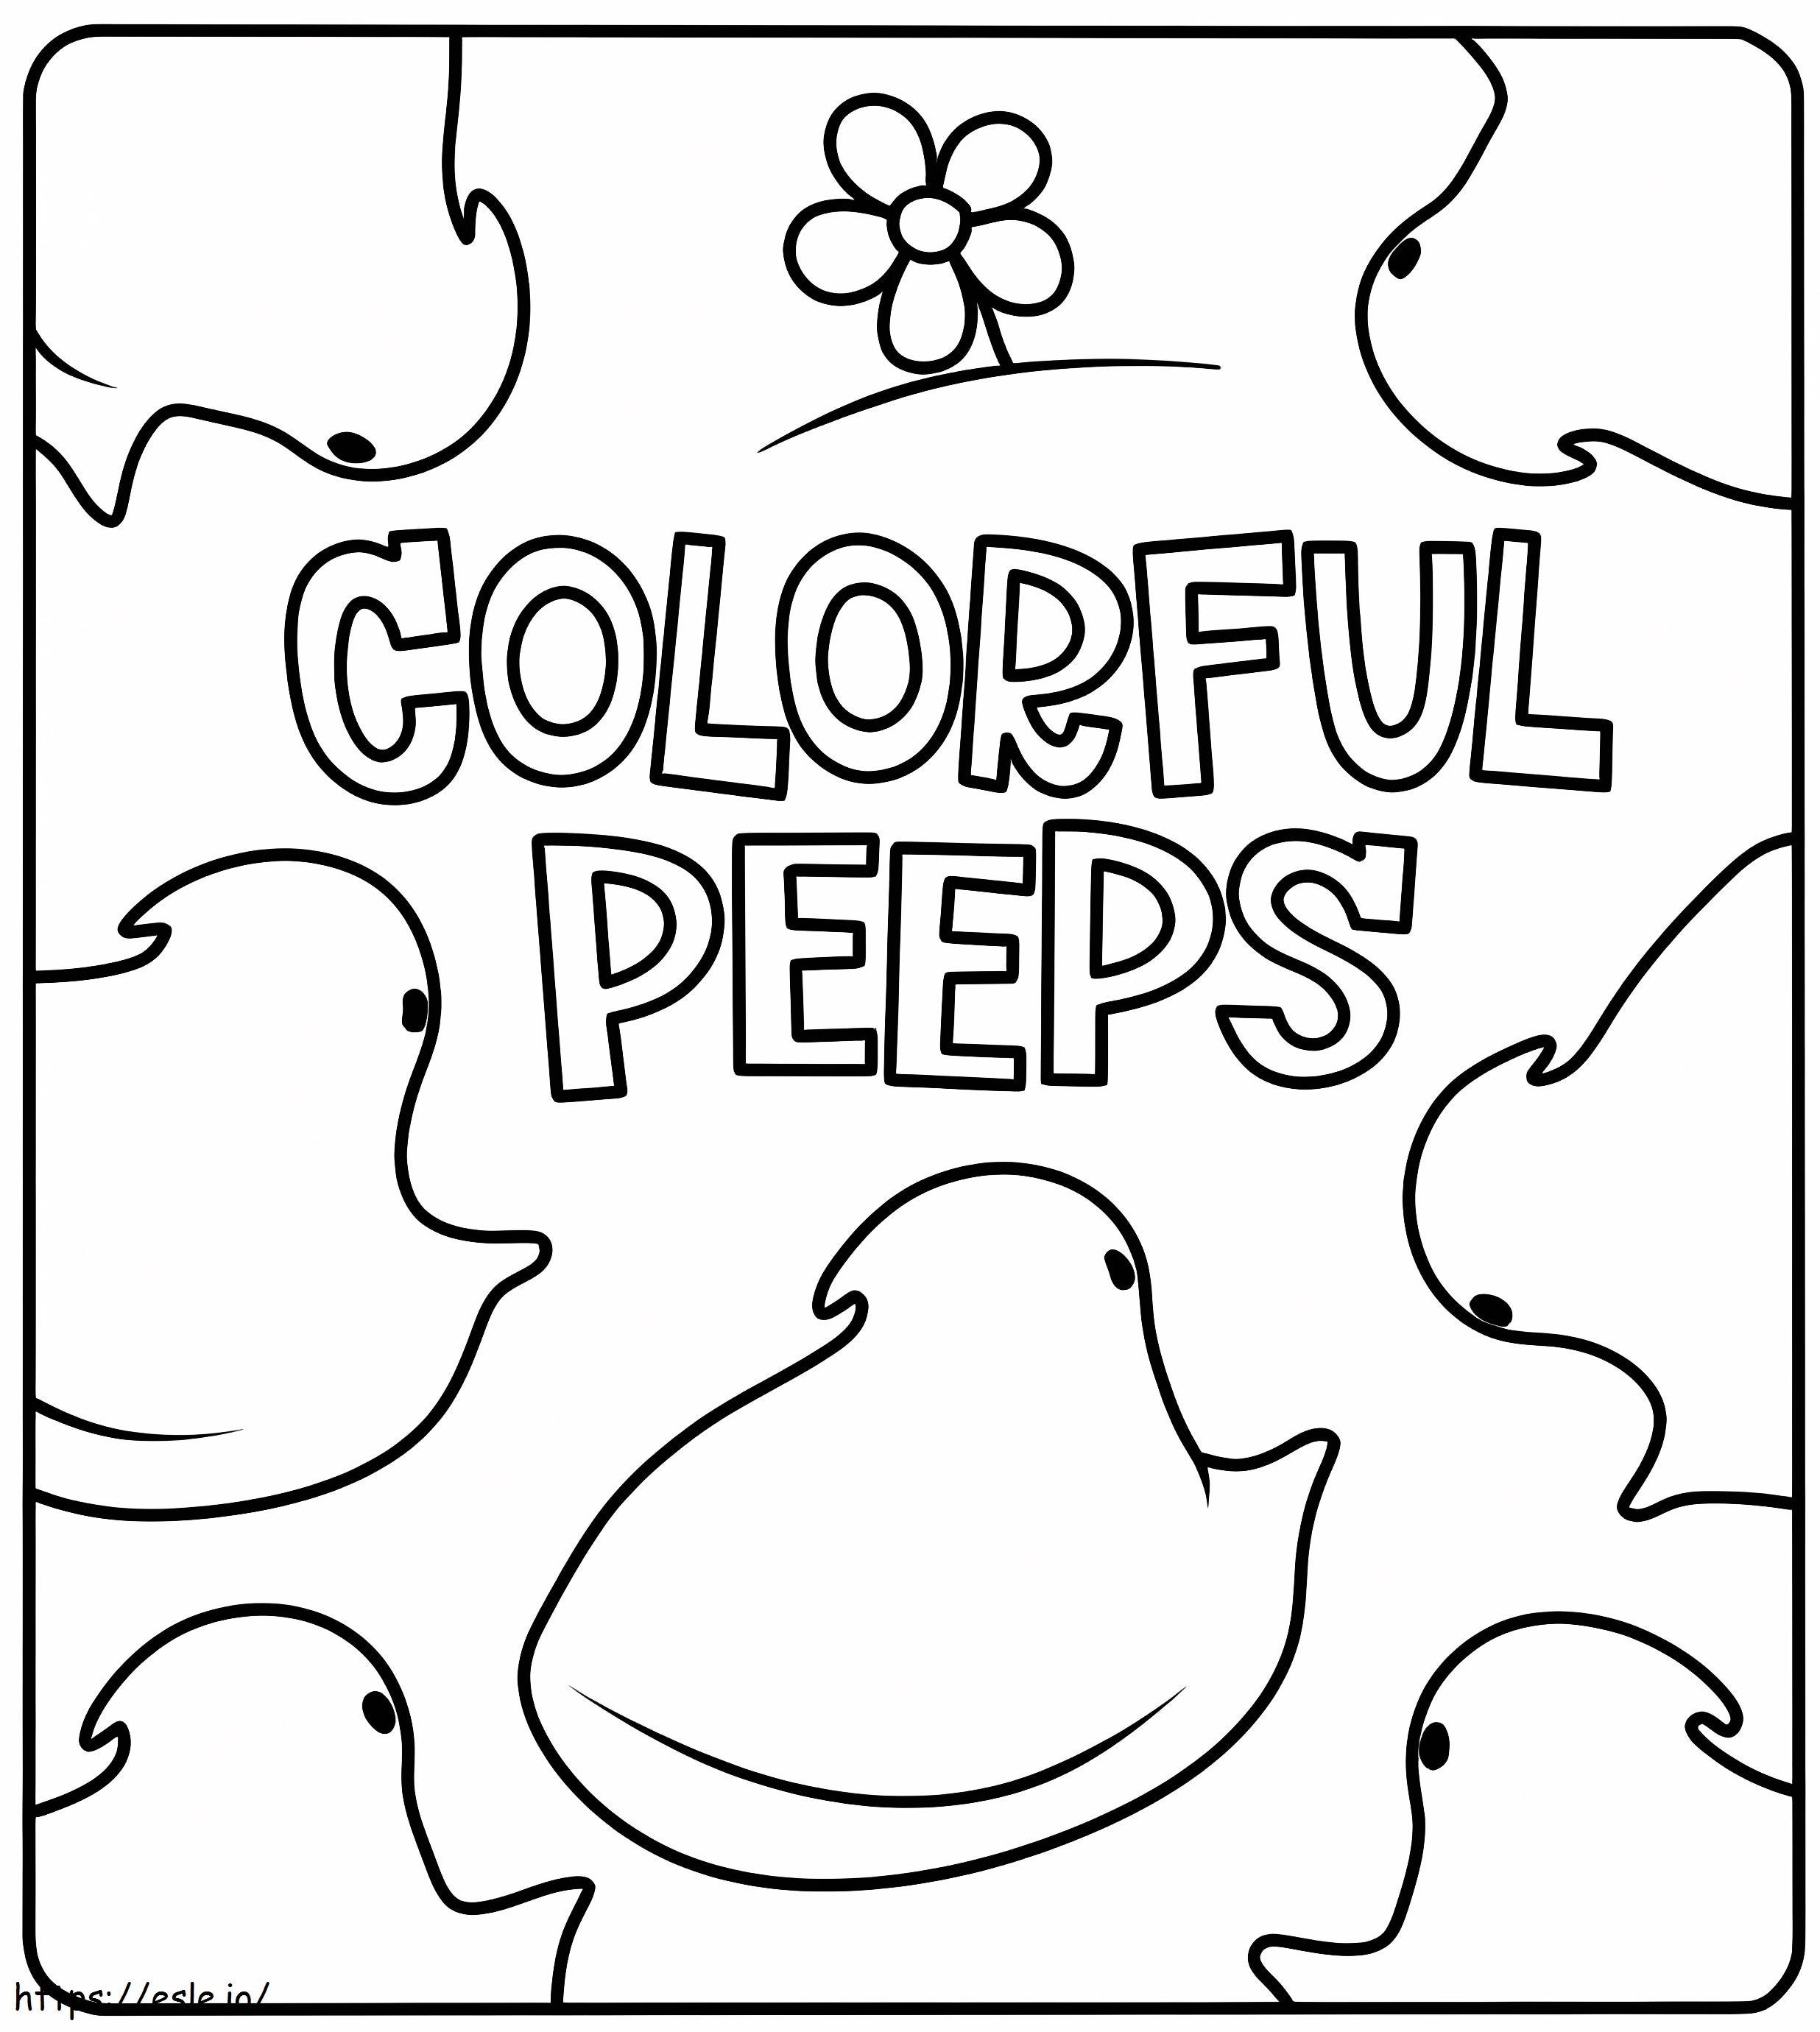 Peeps colorați de colorat